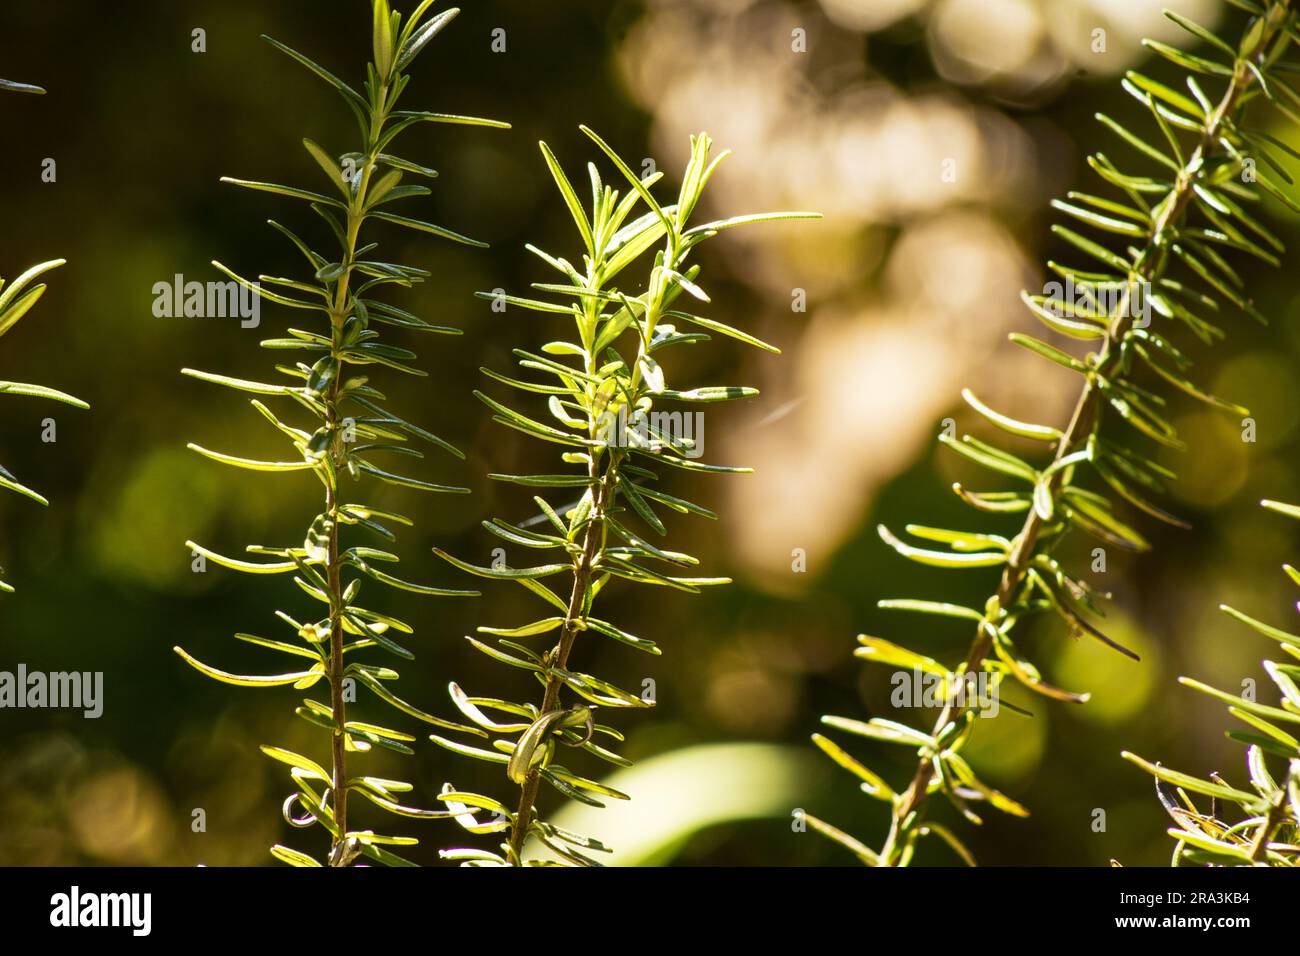 Rosemary, Rosmarinus officinalis, plant on natural background Stock Photo